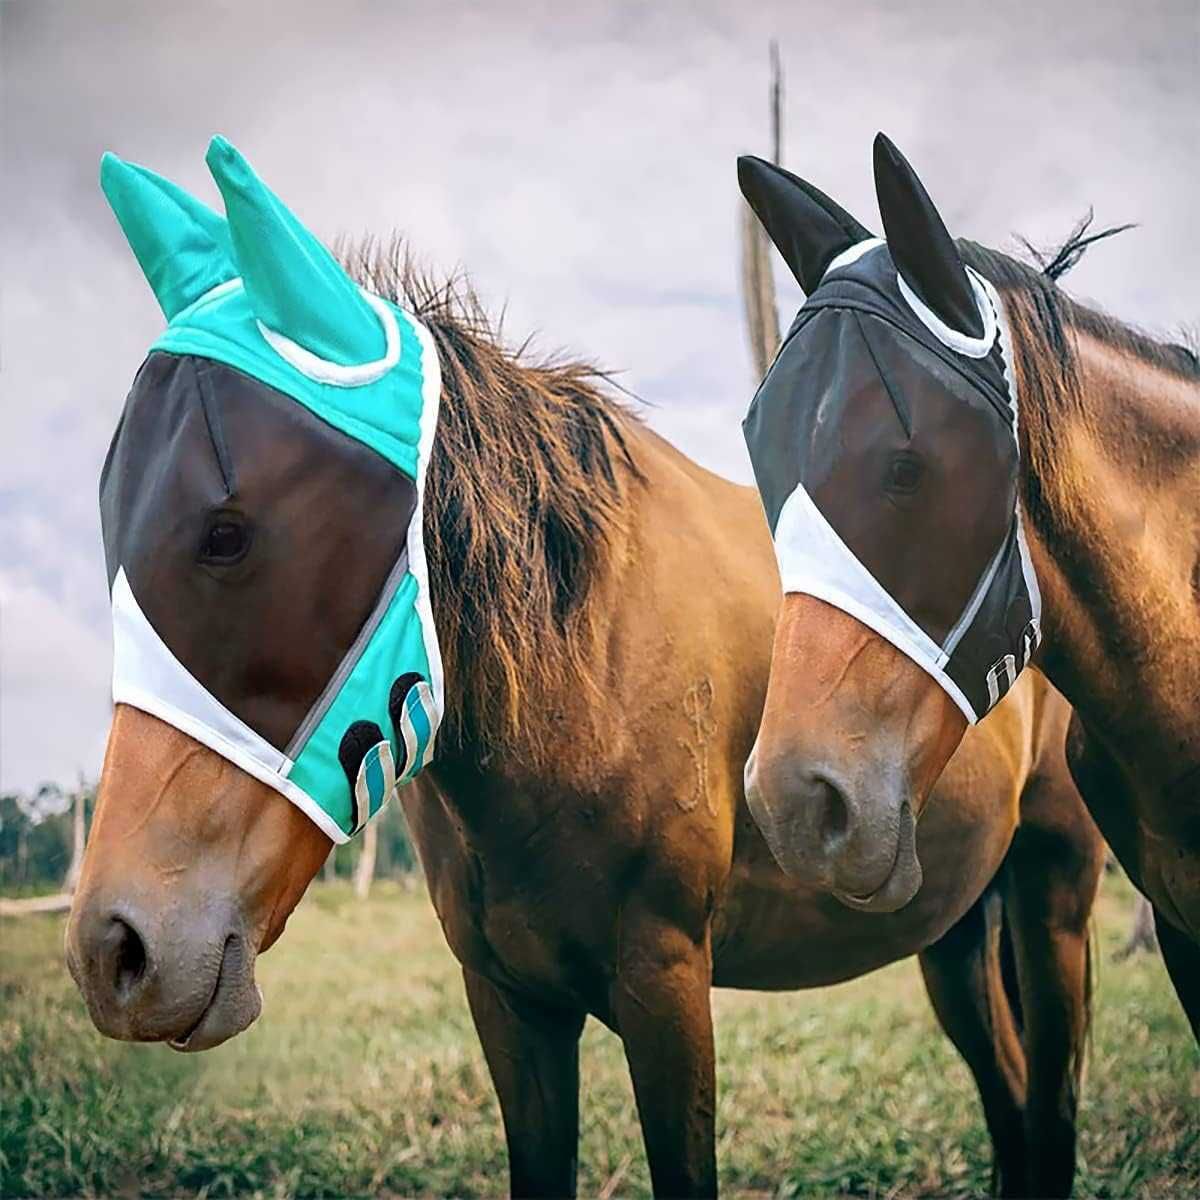 Masca anti muste cu plasa fina, respirabila, protectie UV, pentru cai